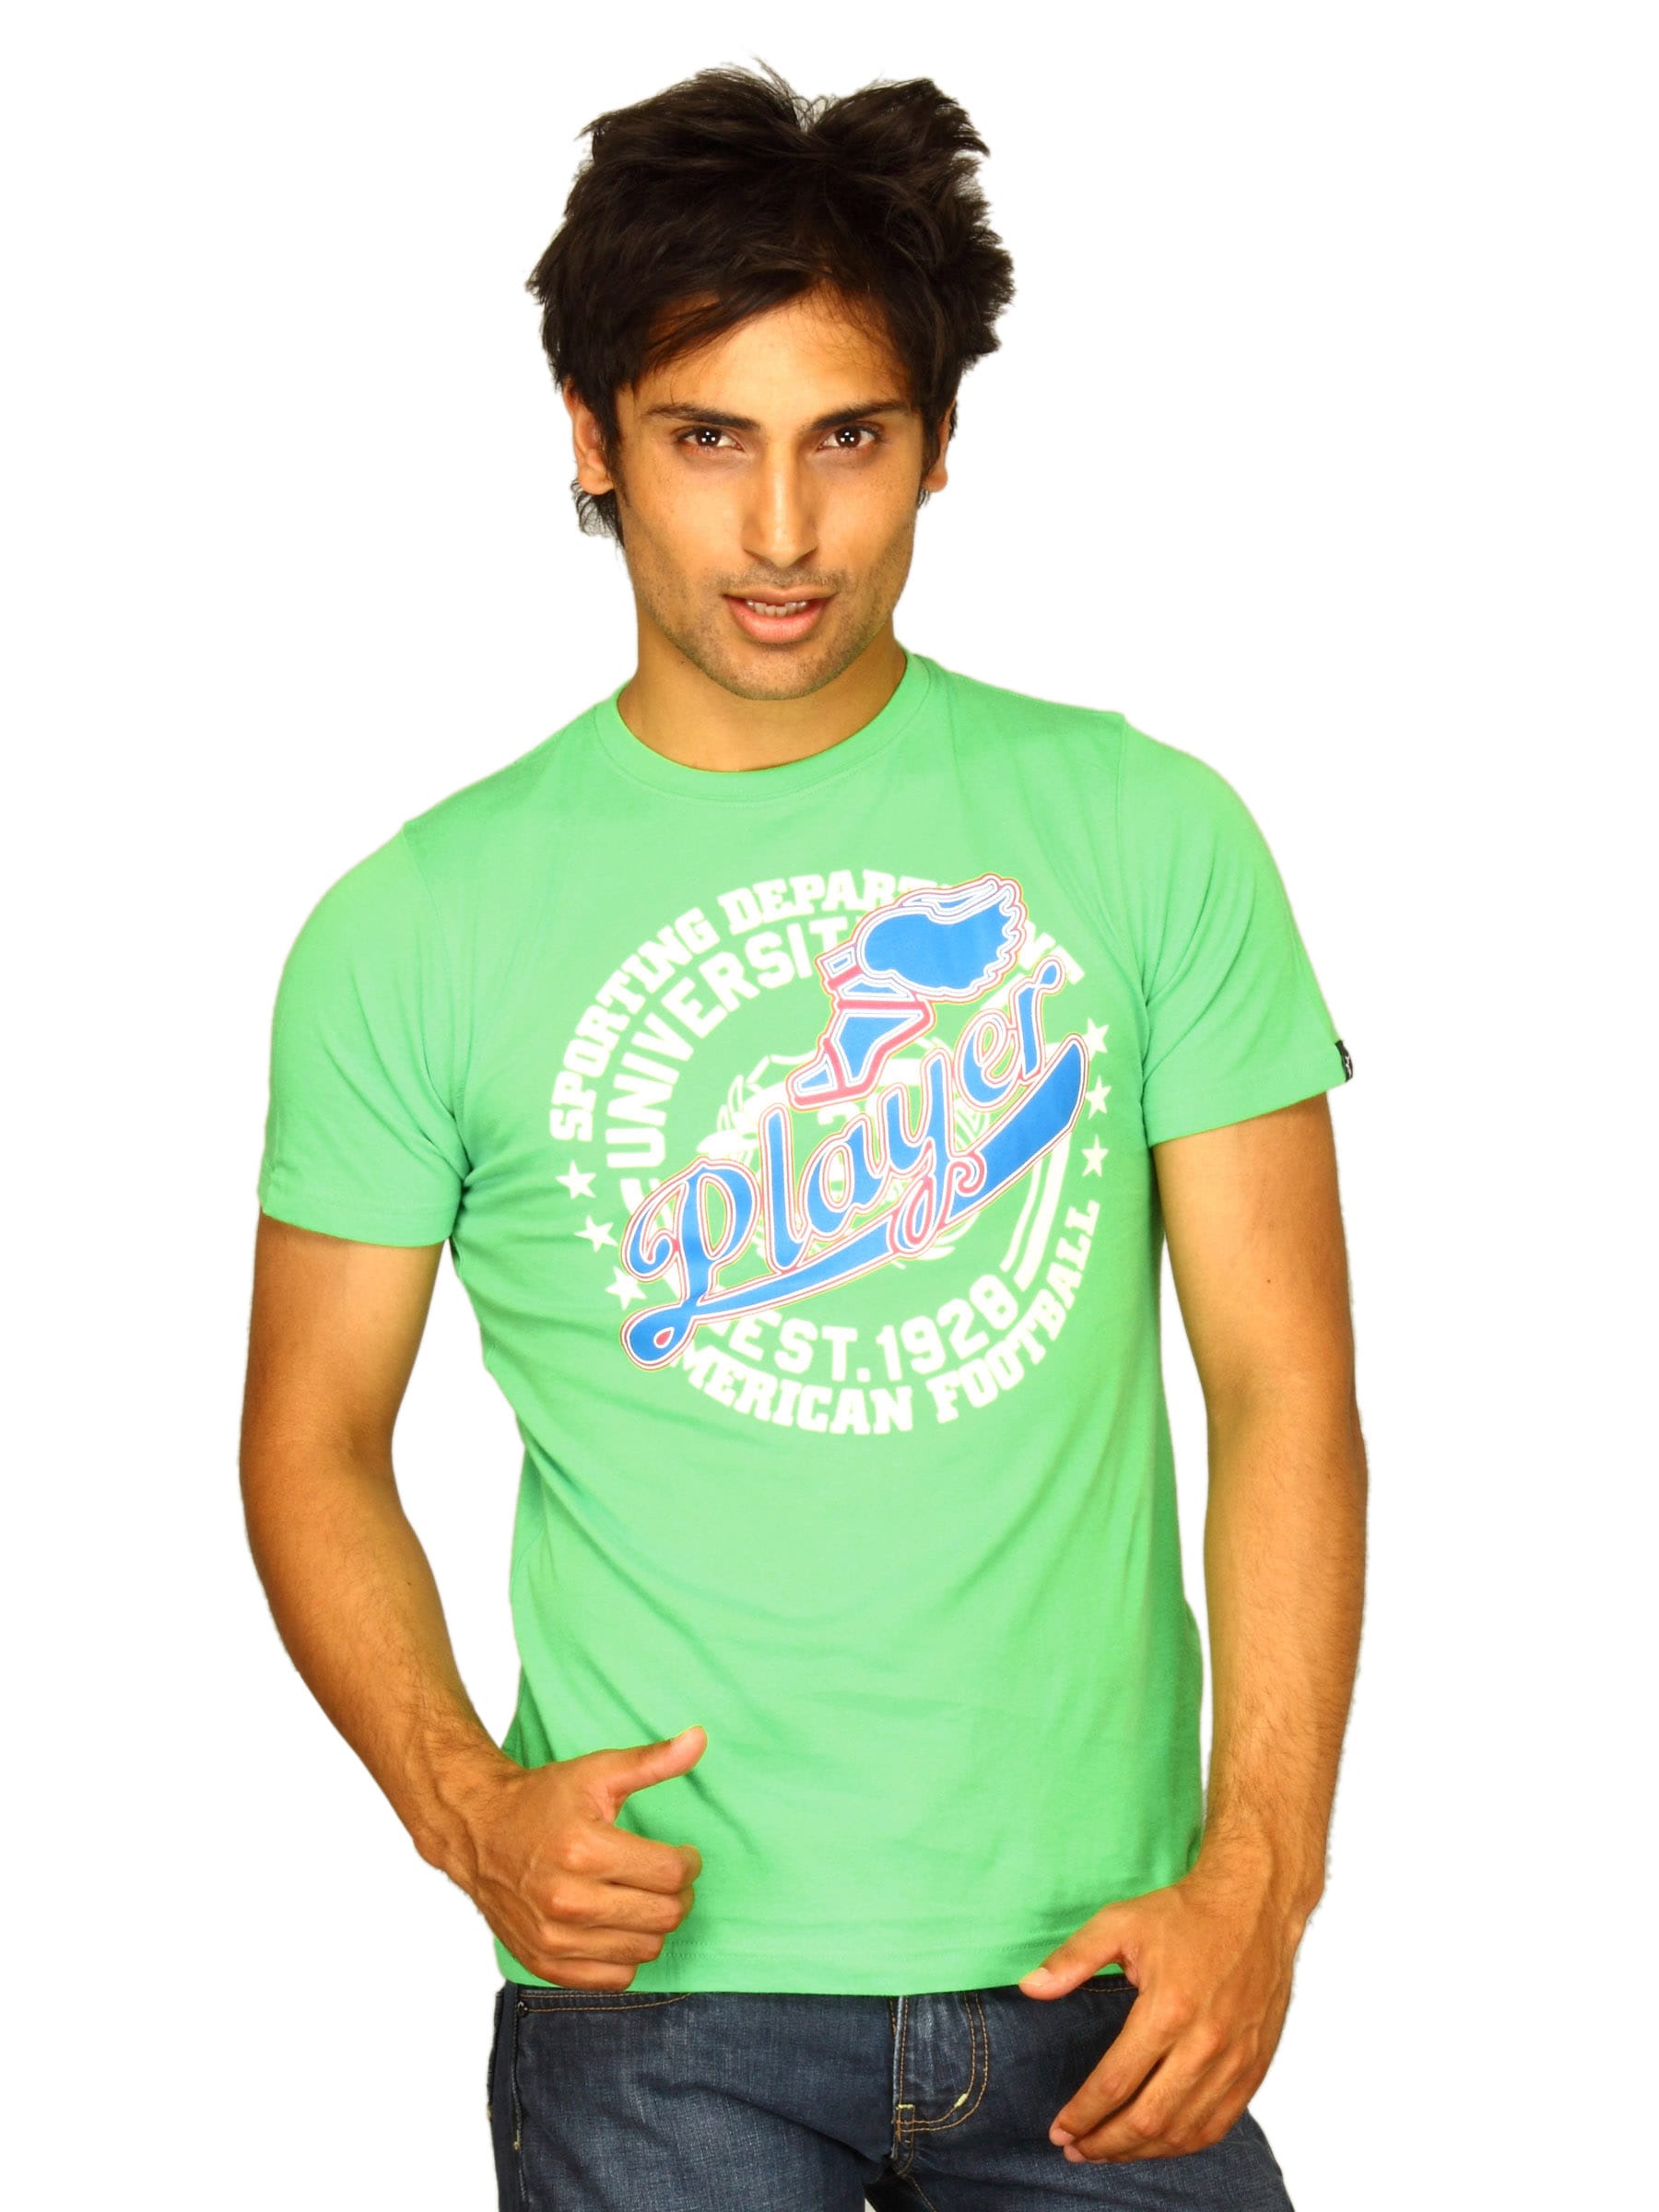 Probase Men's Player Green T-shirt